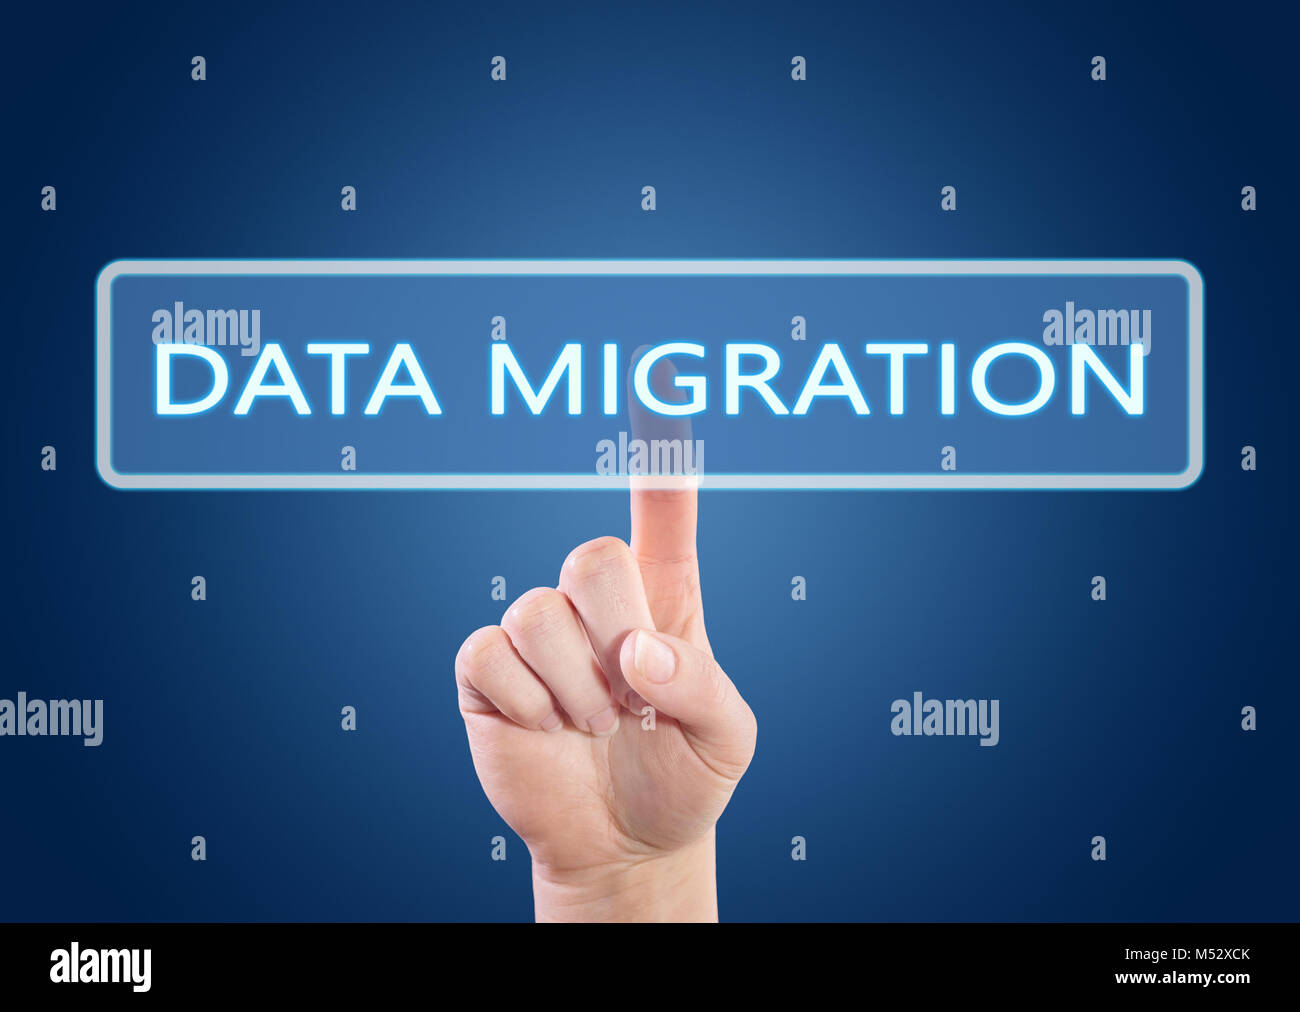 Data Migration text concept Stock Photo